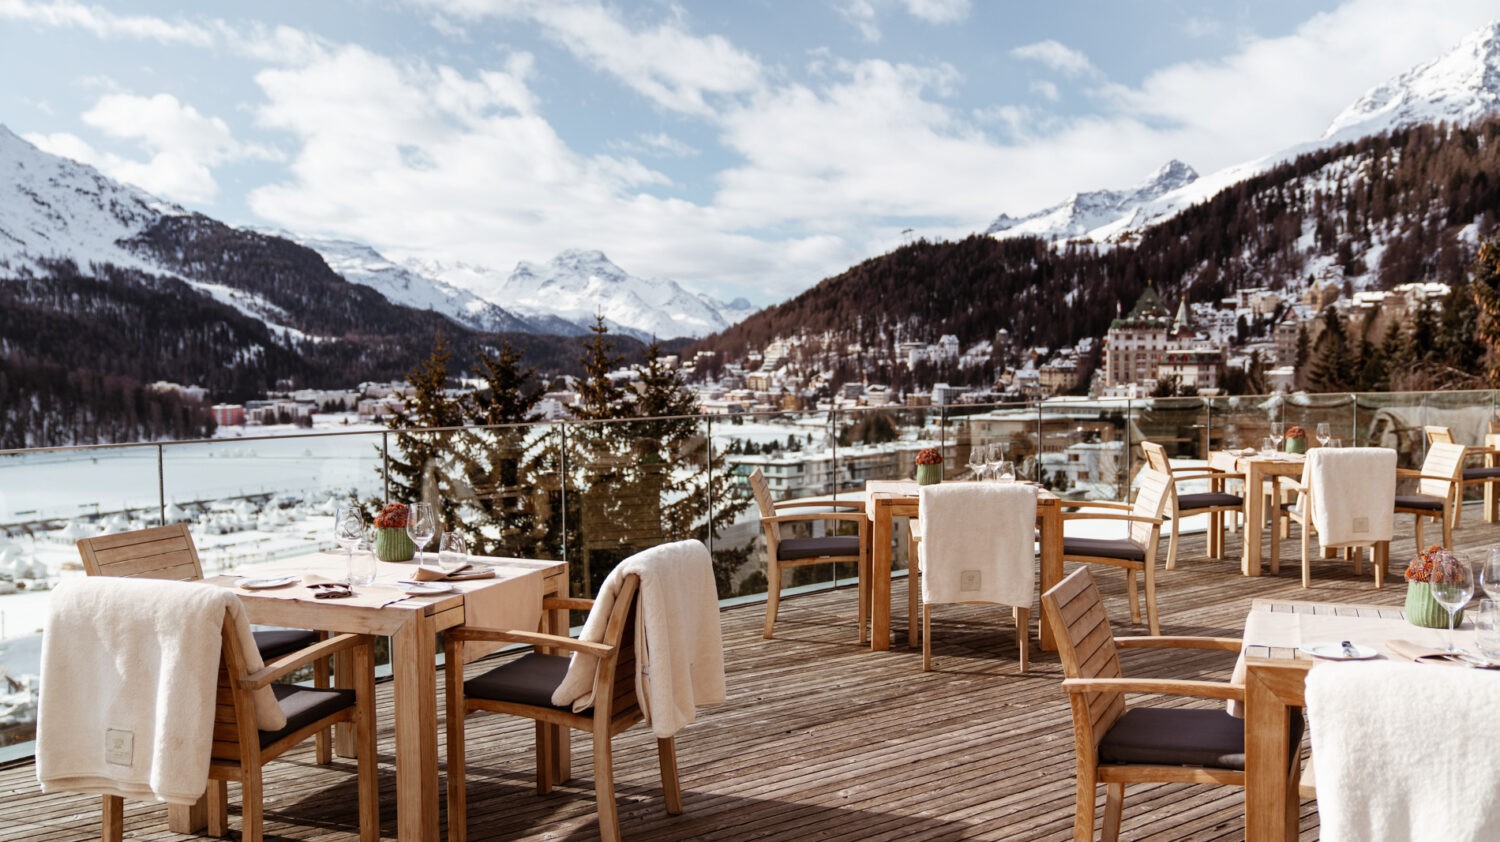 Carlton St. Moritz – Culinary